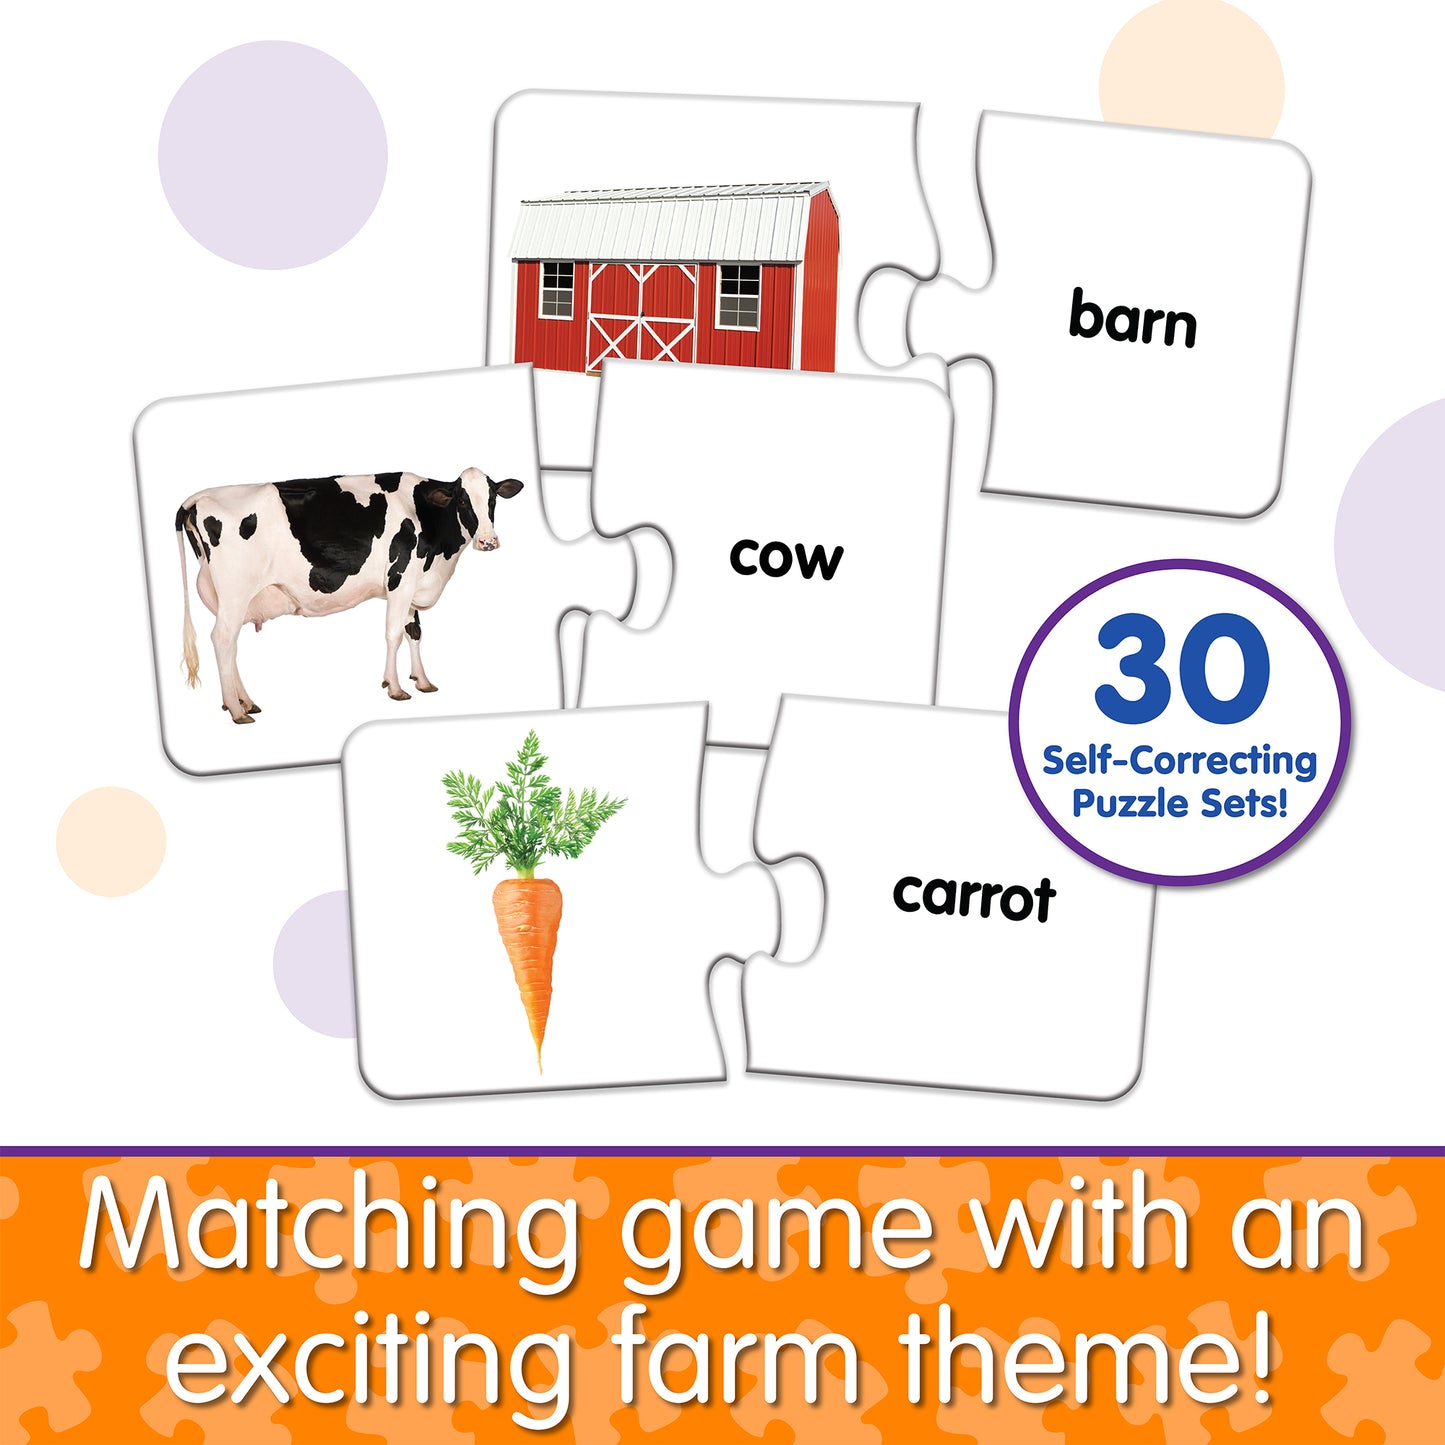 Match It! On The Farm